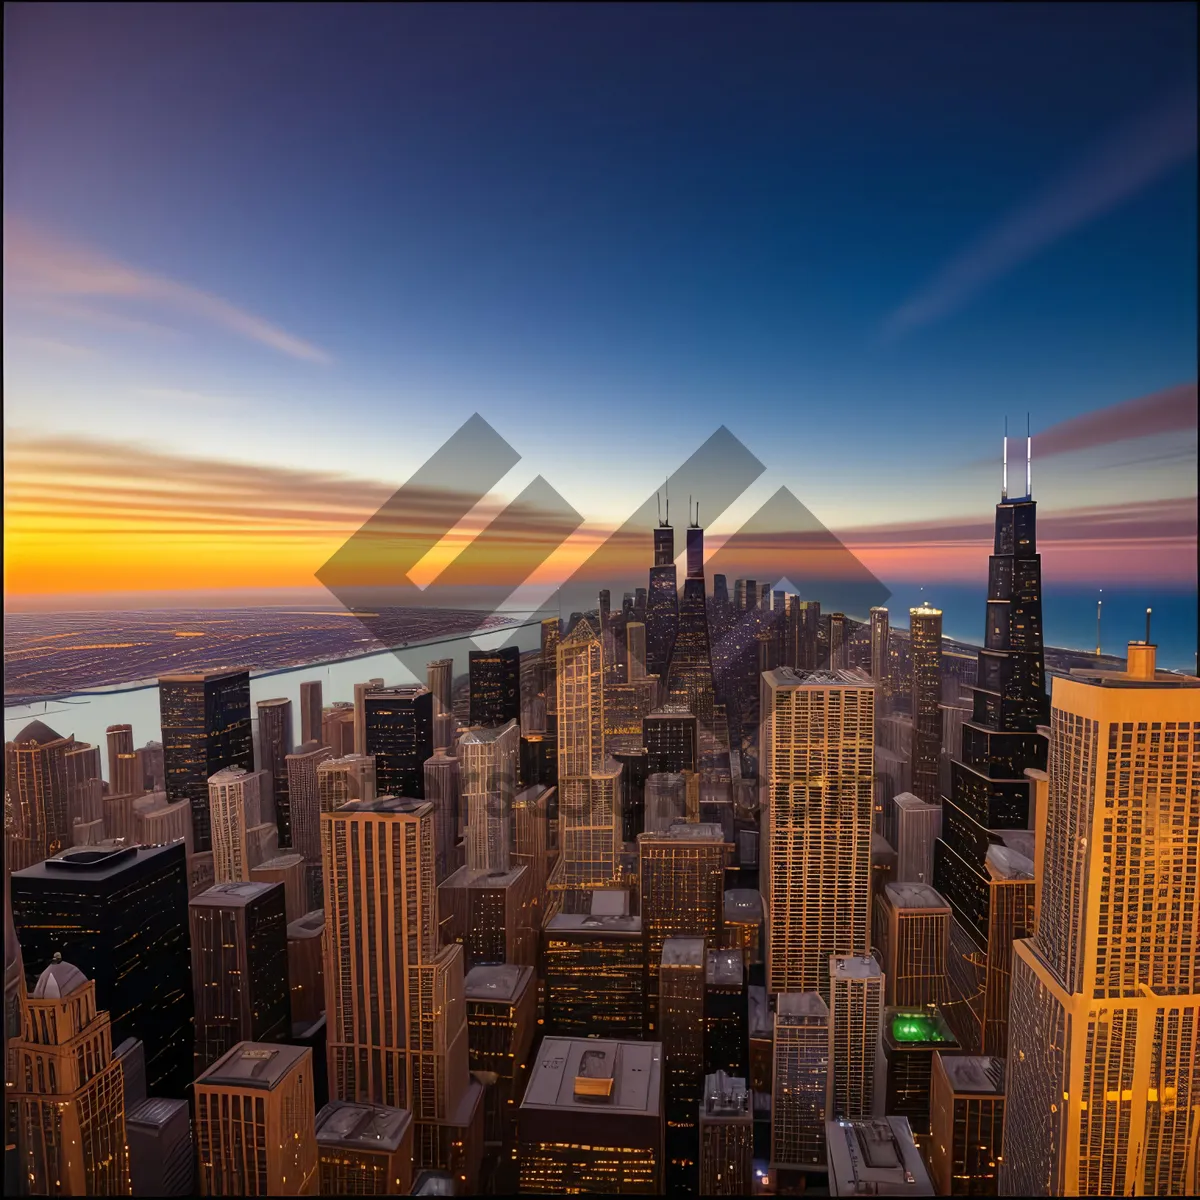 Picture of Urban Twilight: Vibrant City Skyline at Sunset